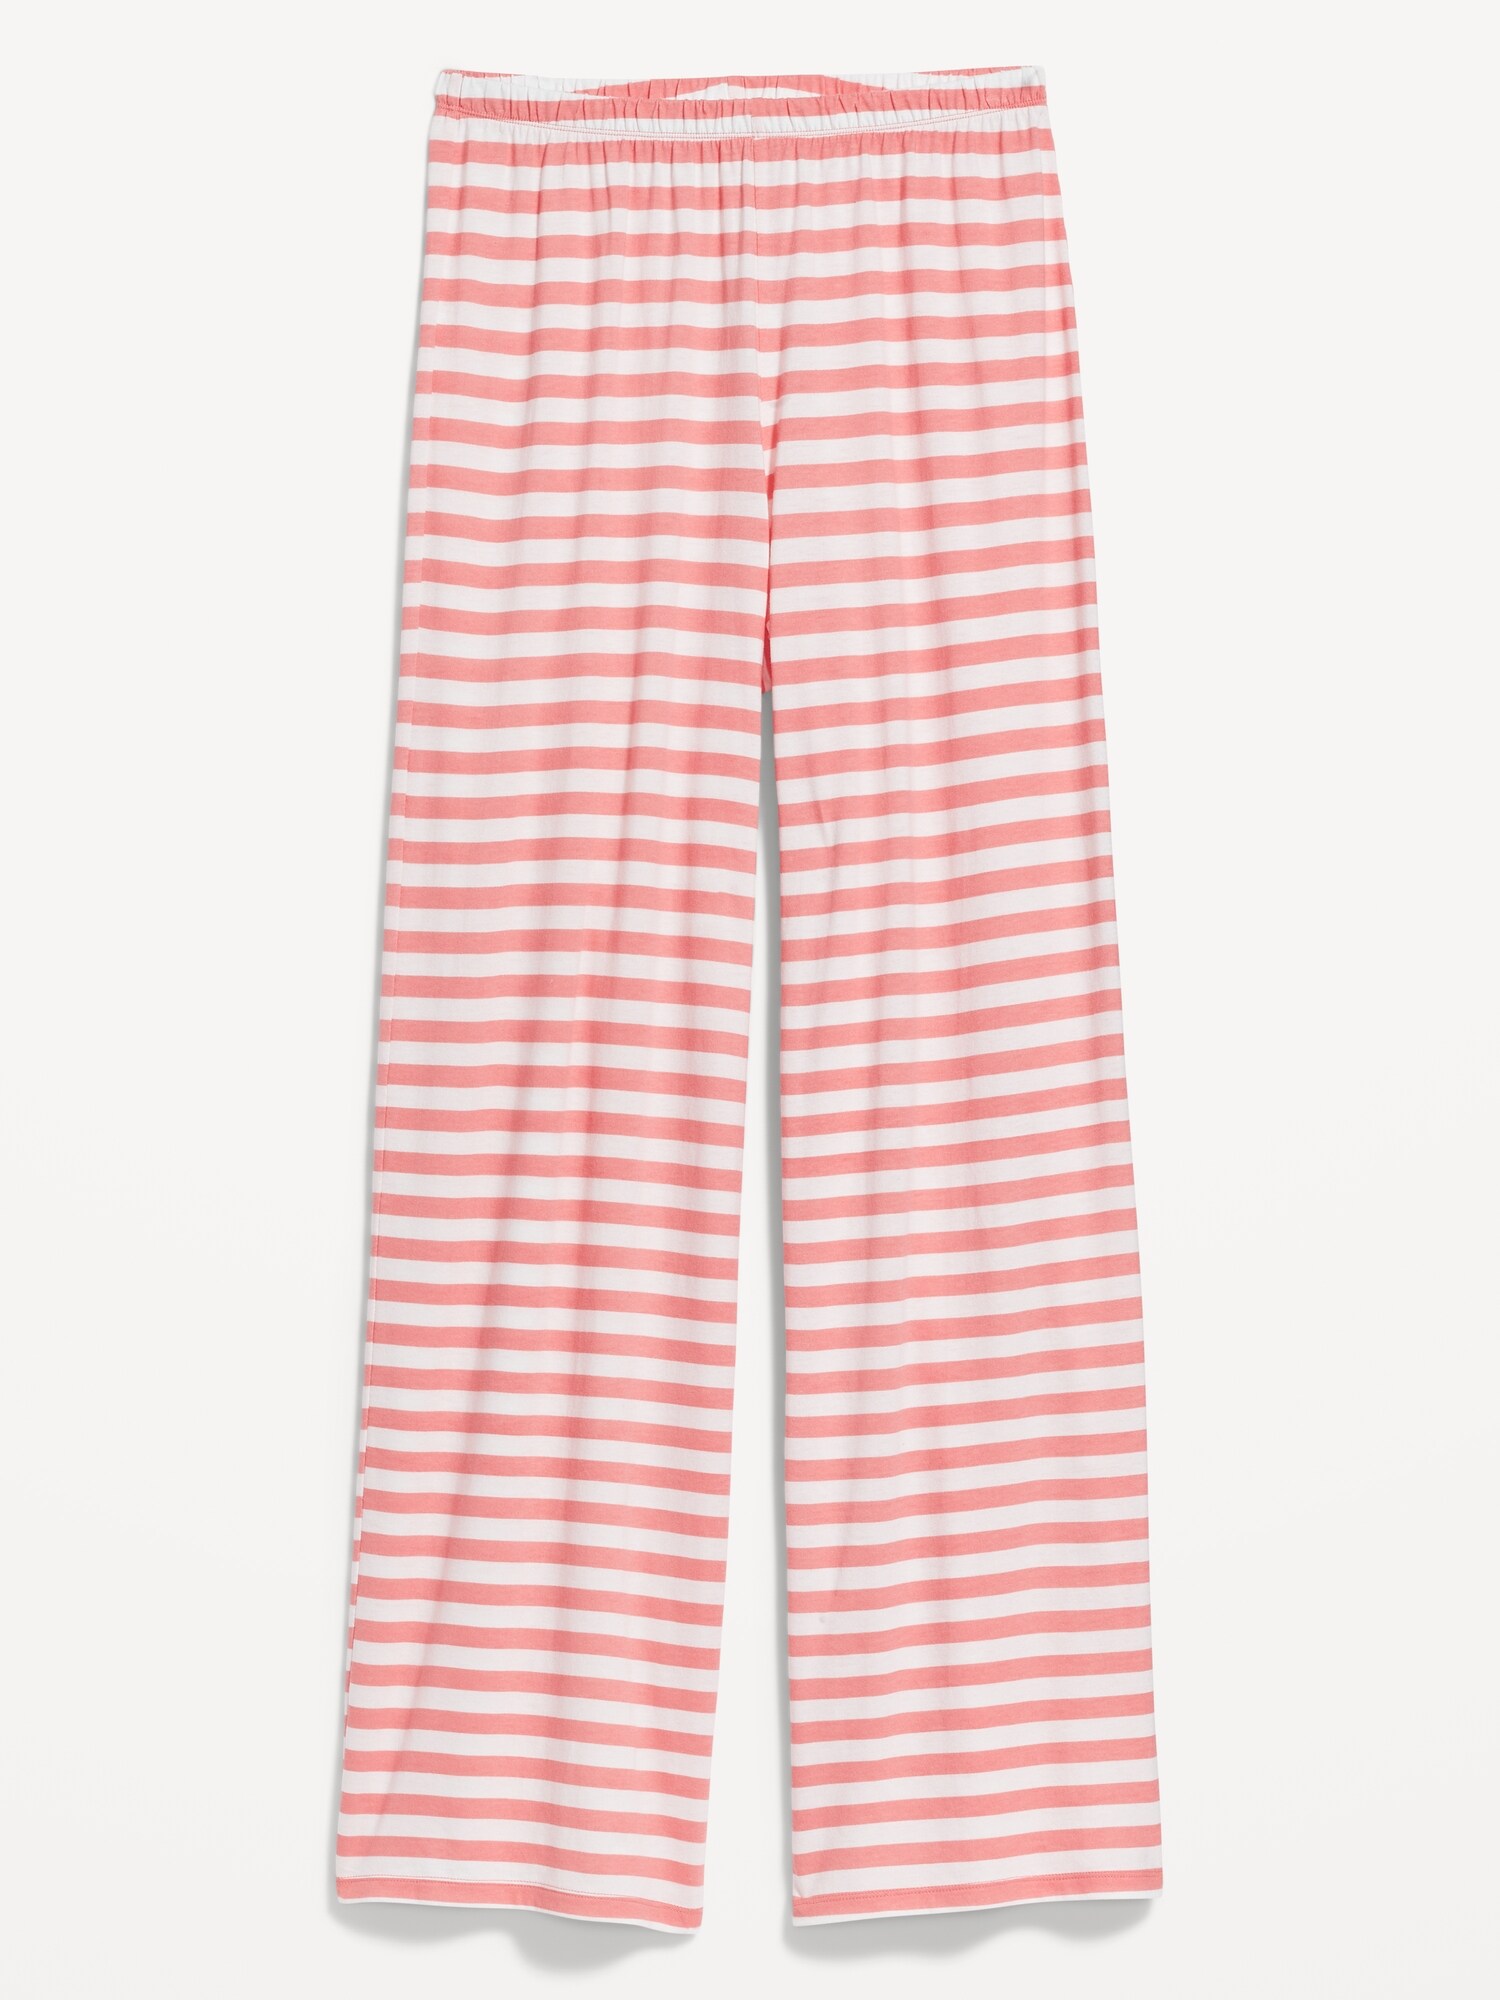 Old Navy thermal knit fitted leggings pajama lounge pants sleep